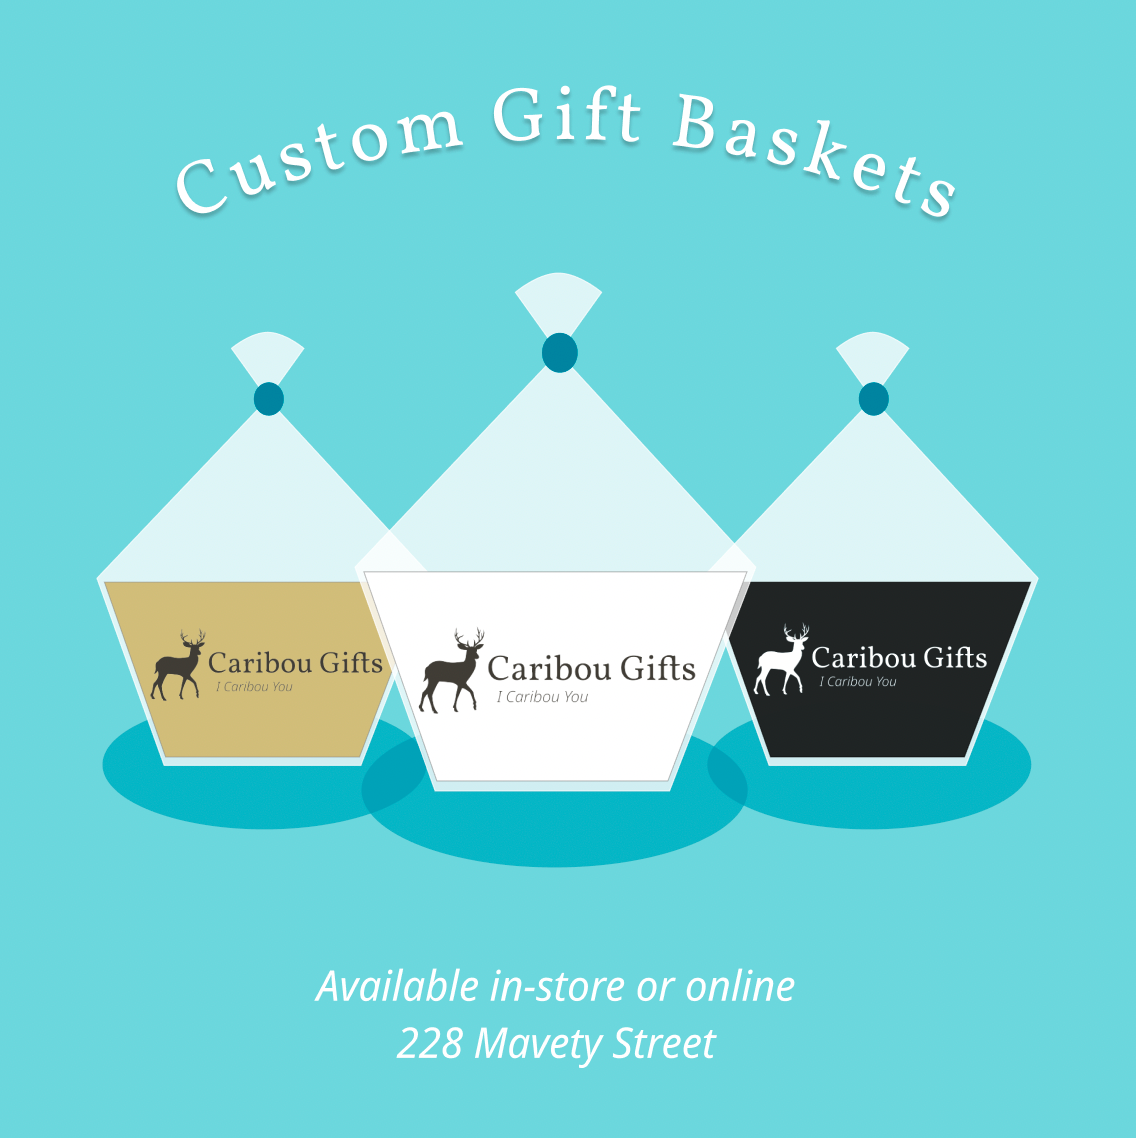 Custom Birthday Gift Basket (Ultimate)